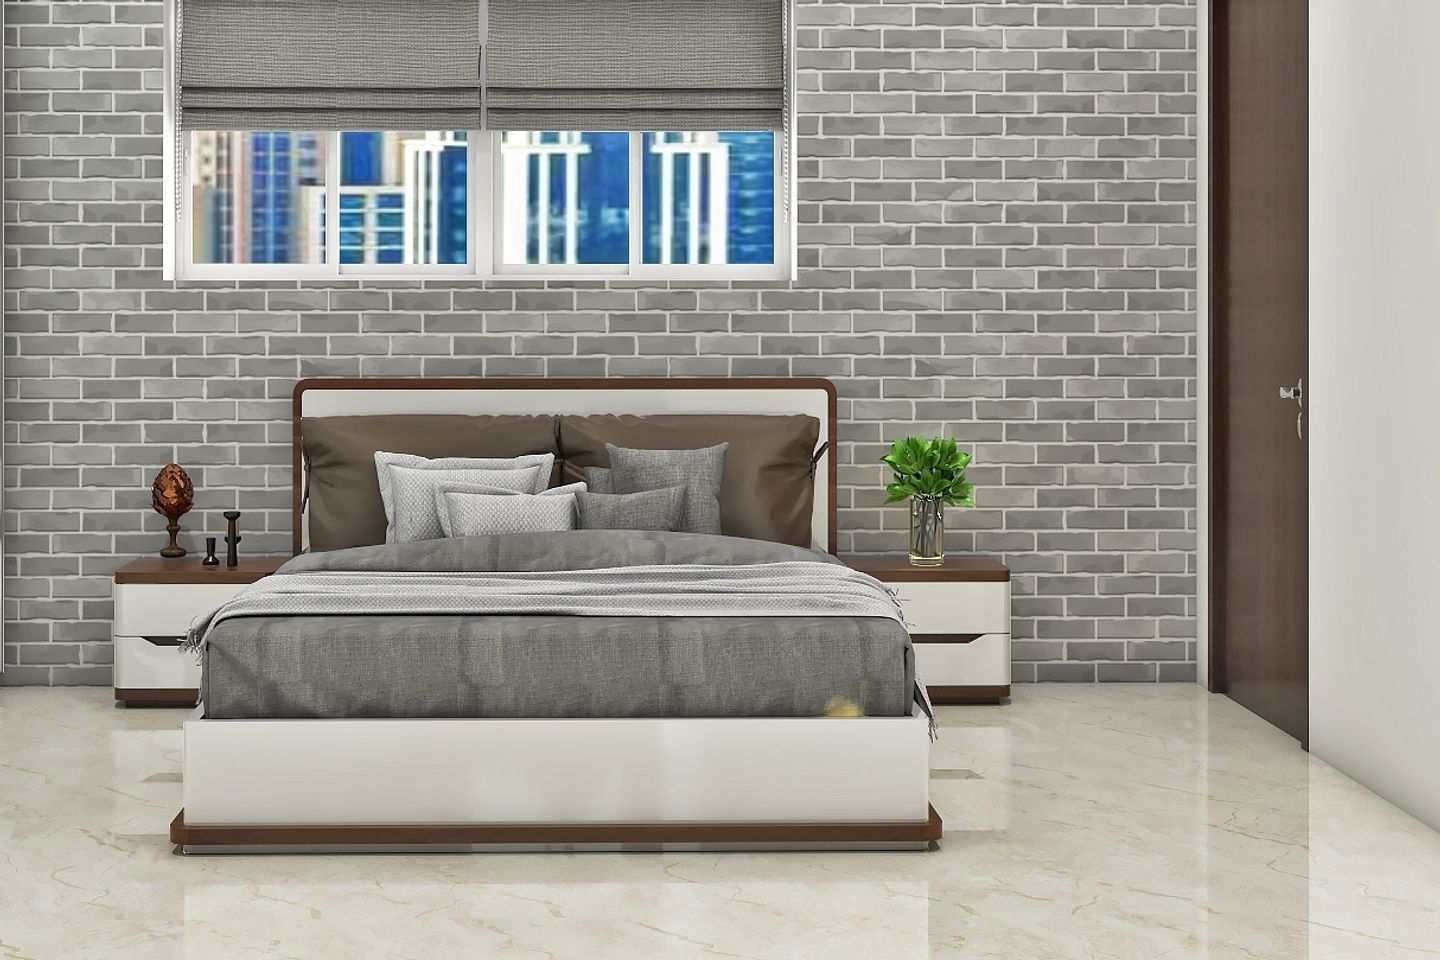 Glossy Beige Flooring Design For Bedrooms - Livspace